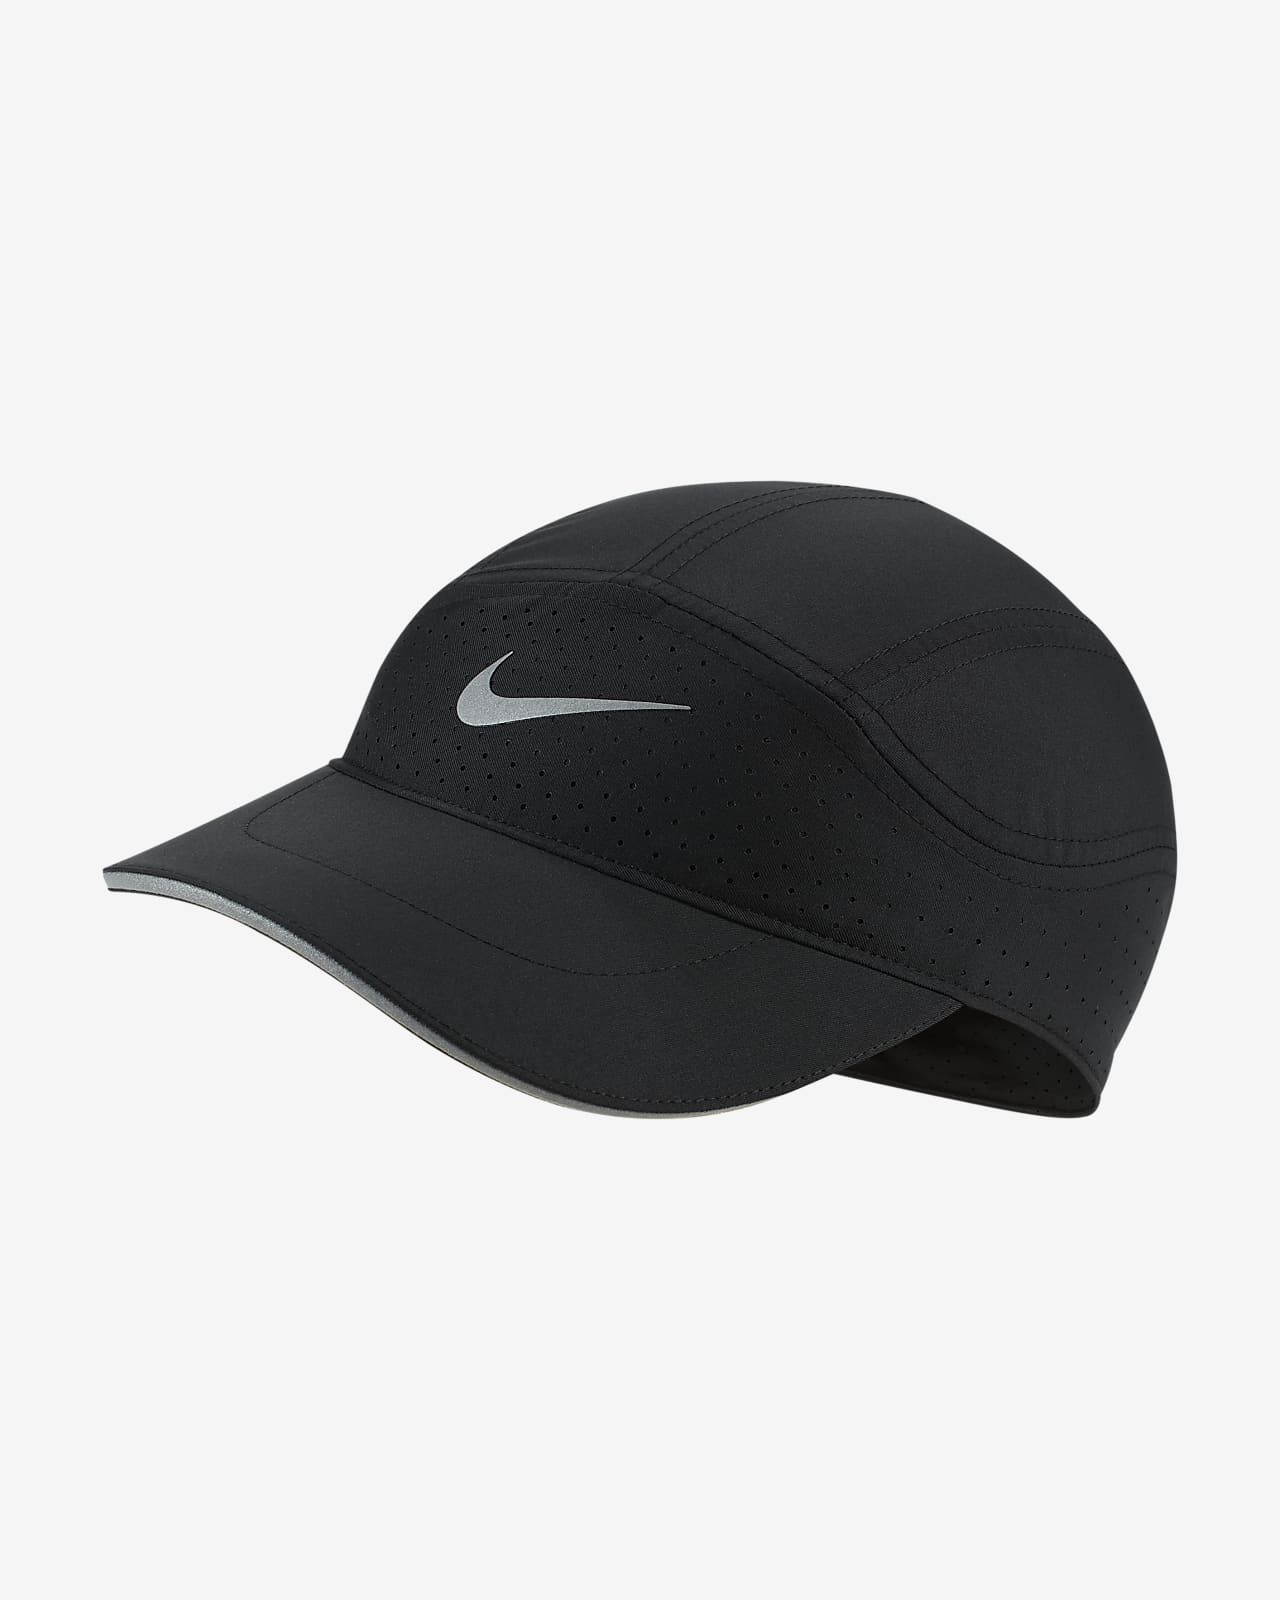 Nike AeroBill Tailwind Running Cap. Nike SG